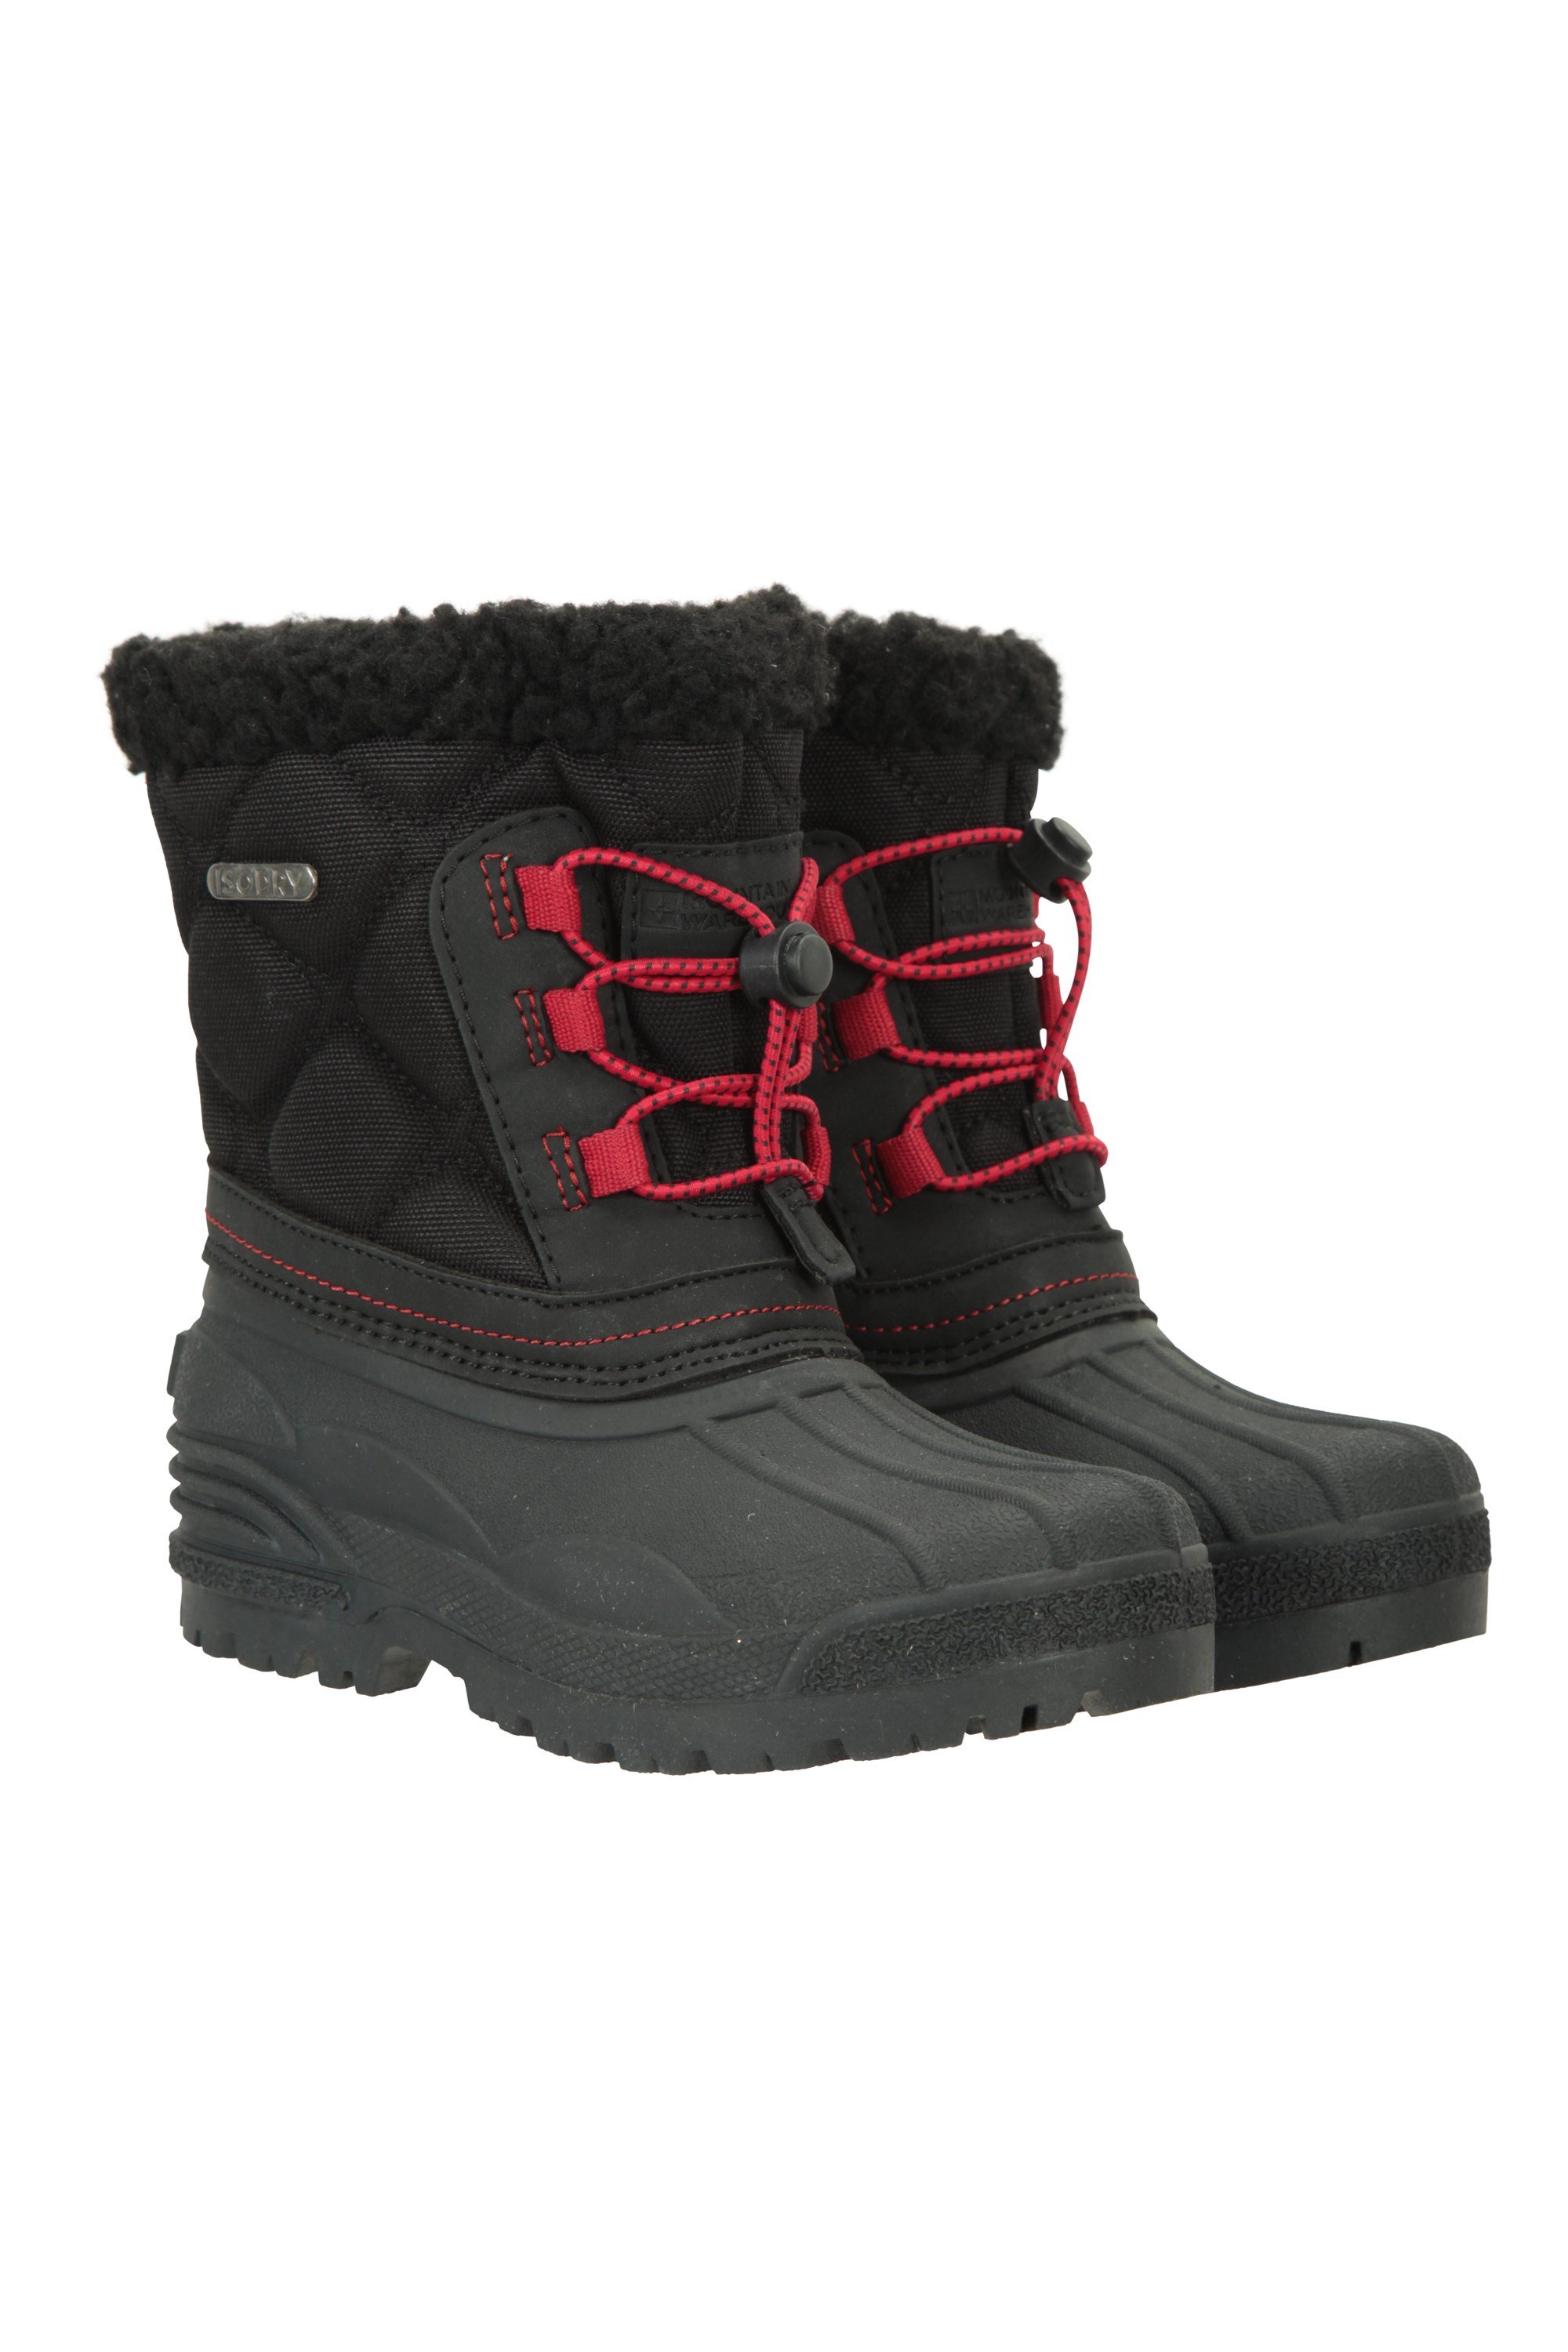 Arctic Kids Trim Waterproof Snow Boots - Black